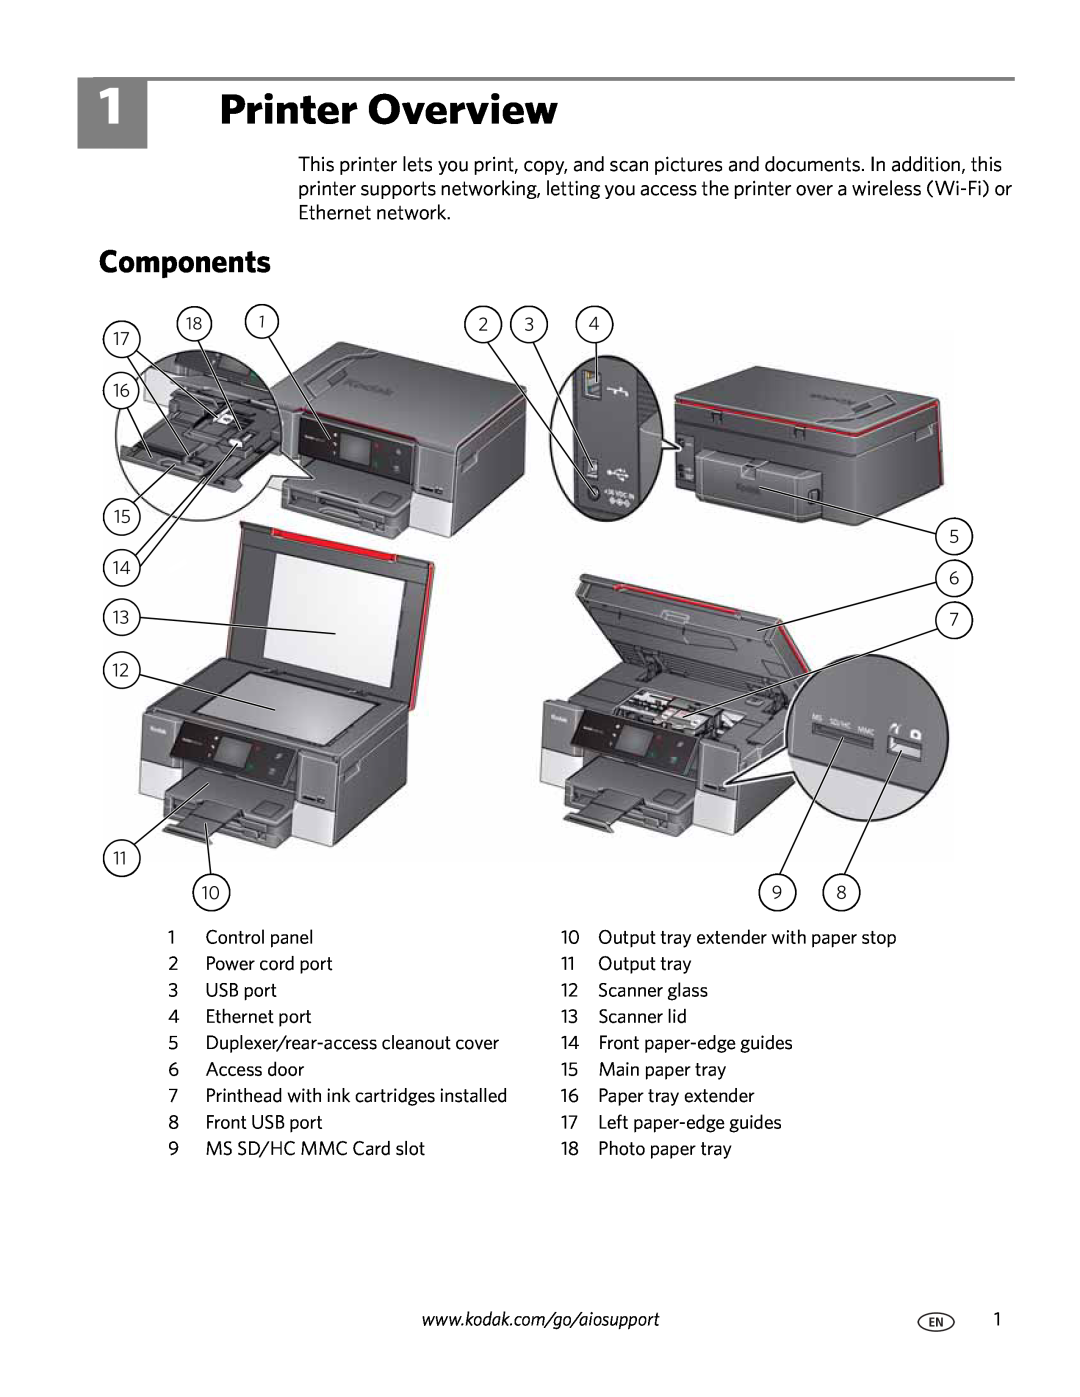 Kodak 7.1 manual Printer Overview, Components 